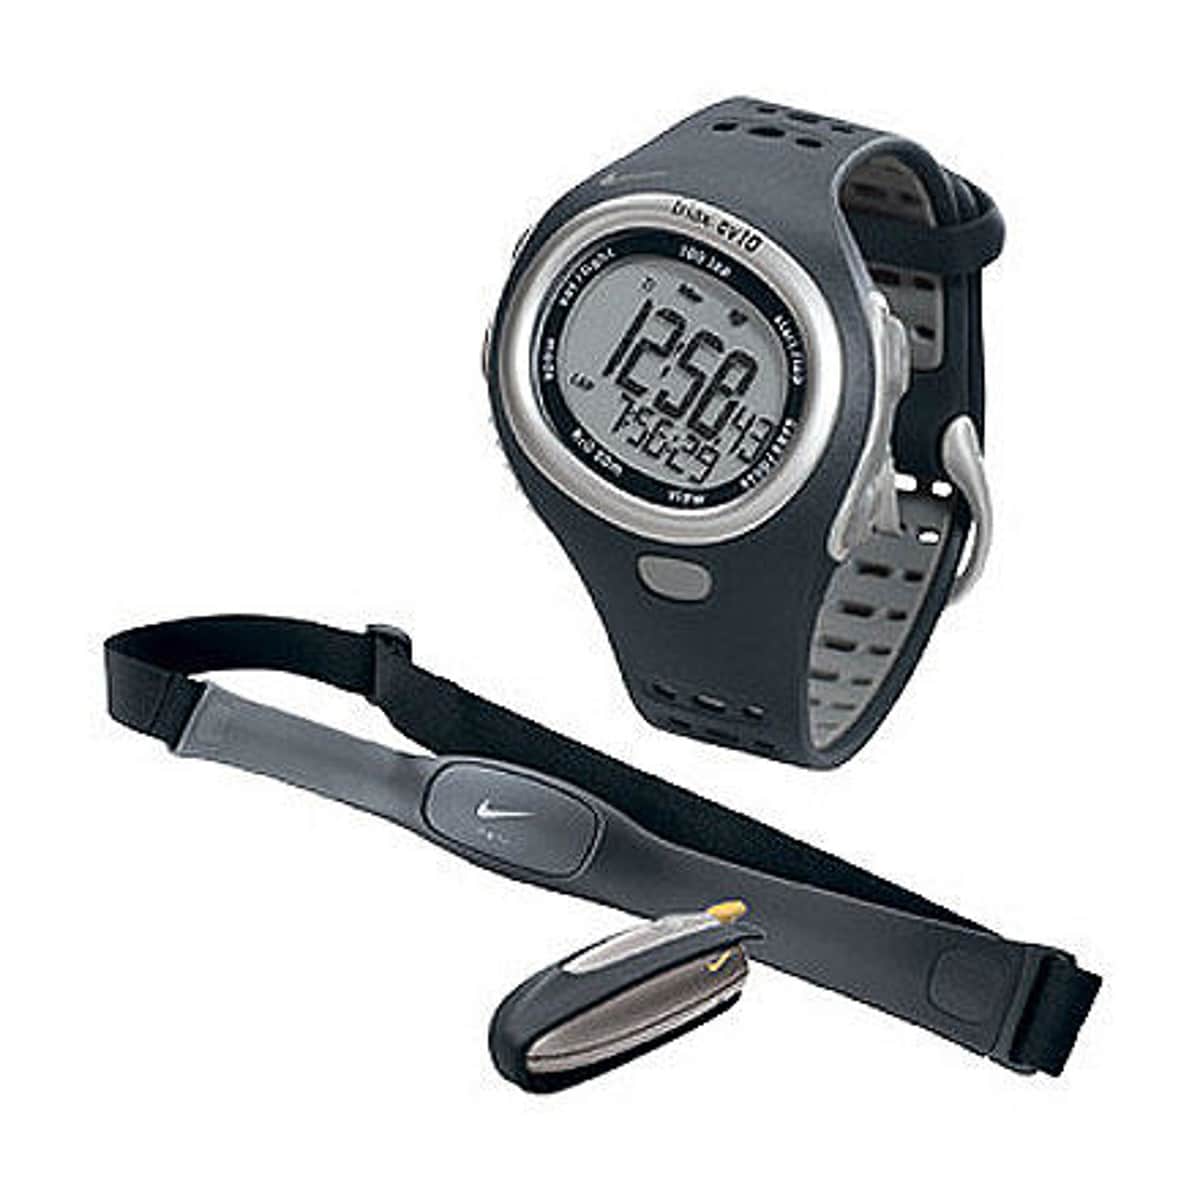 Timing Triax CV10 Rate Pedometer Watch - Accessories